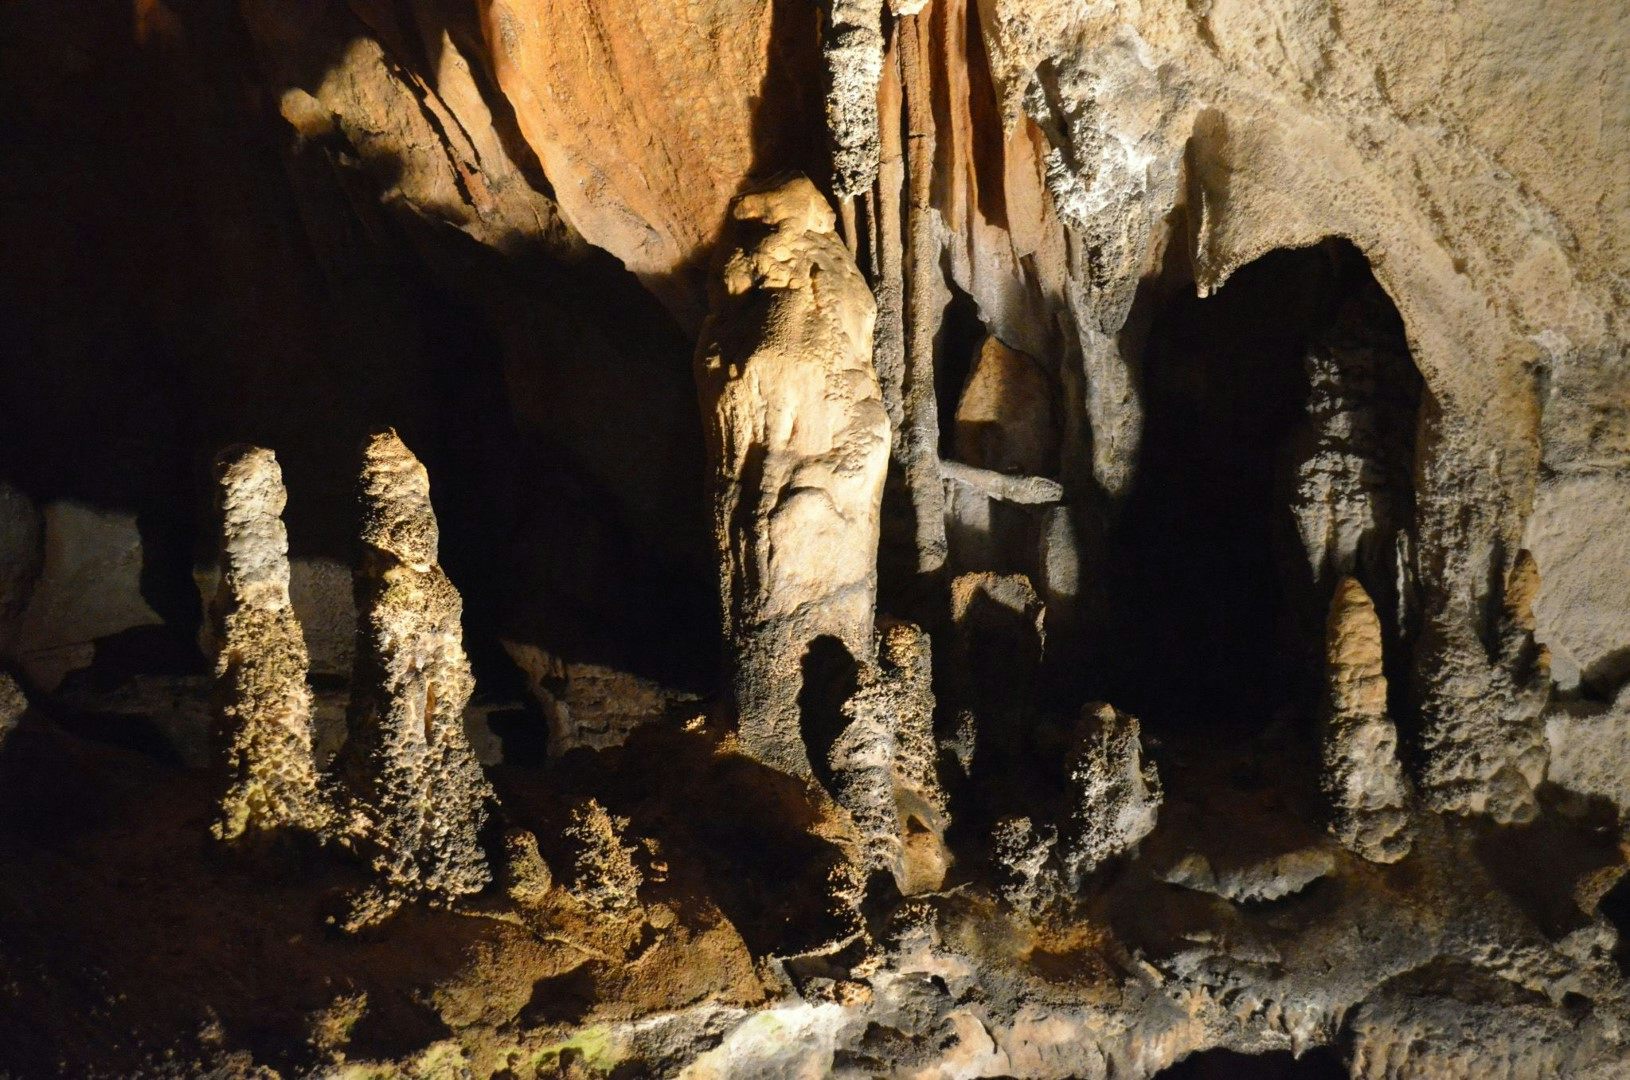 Cerovac caves